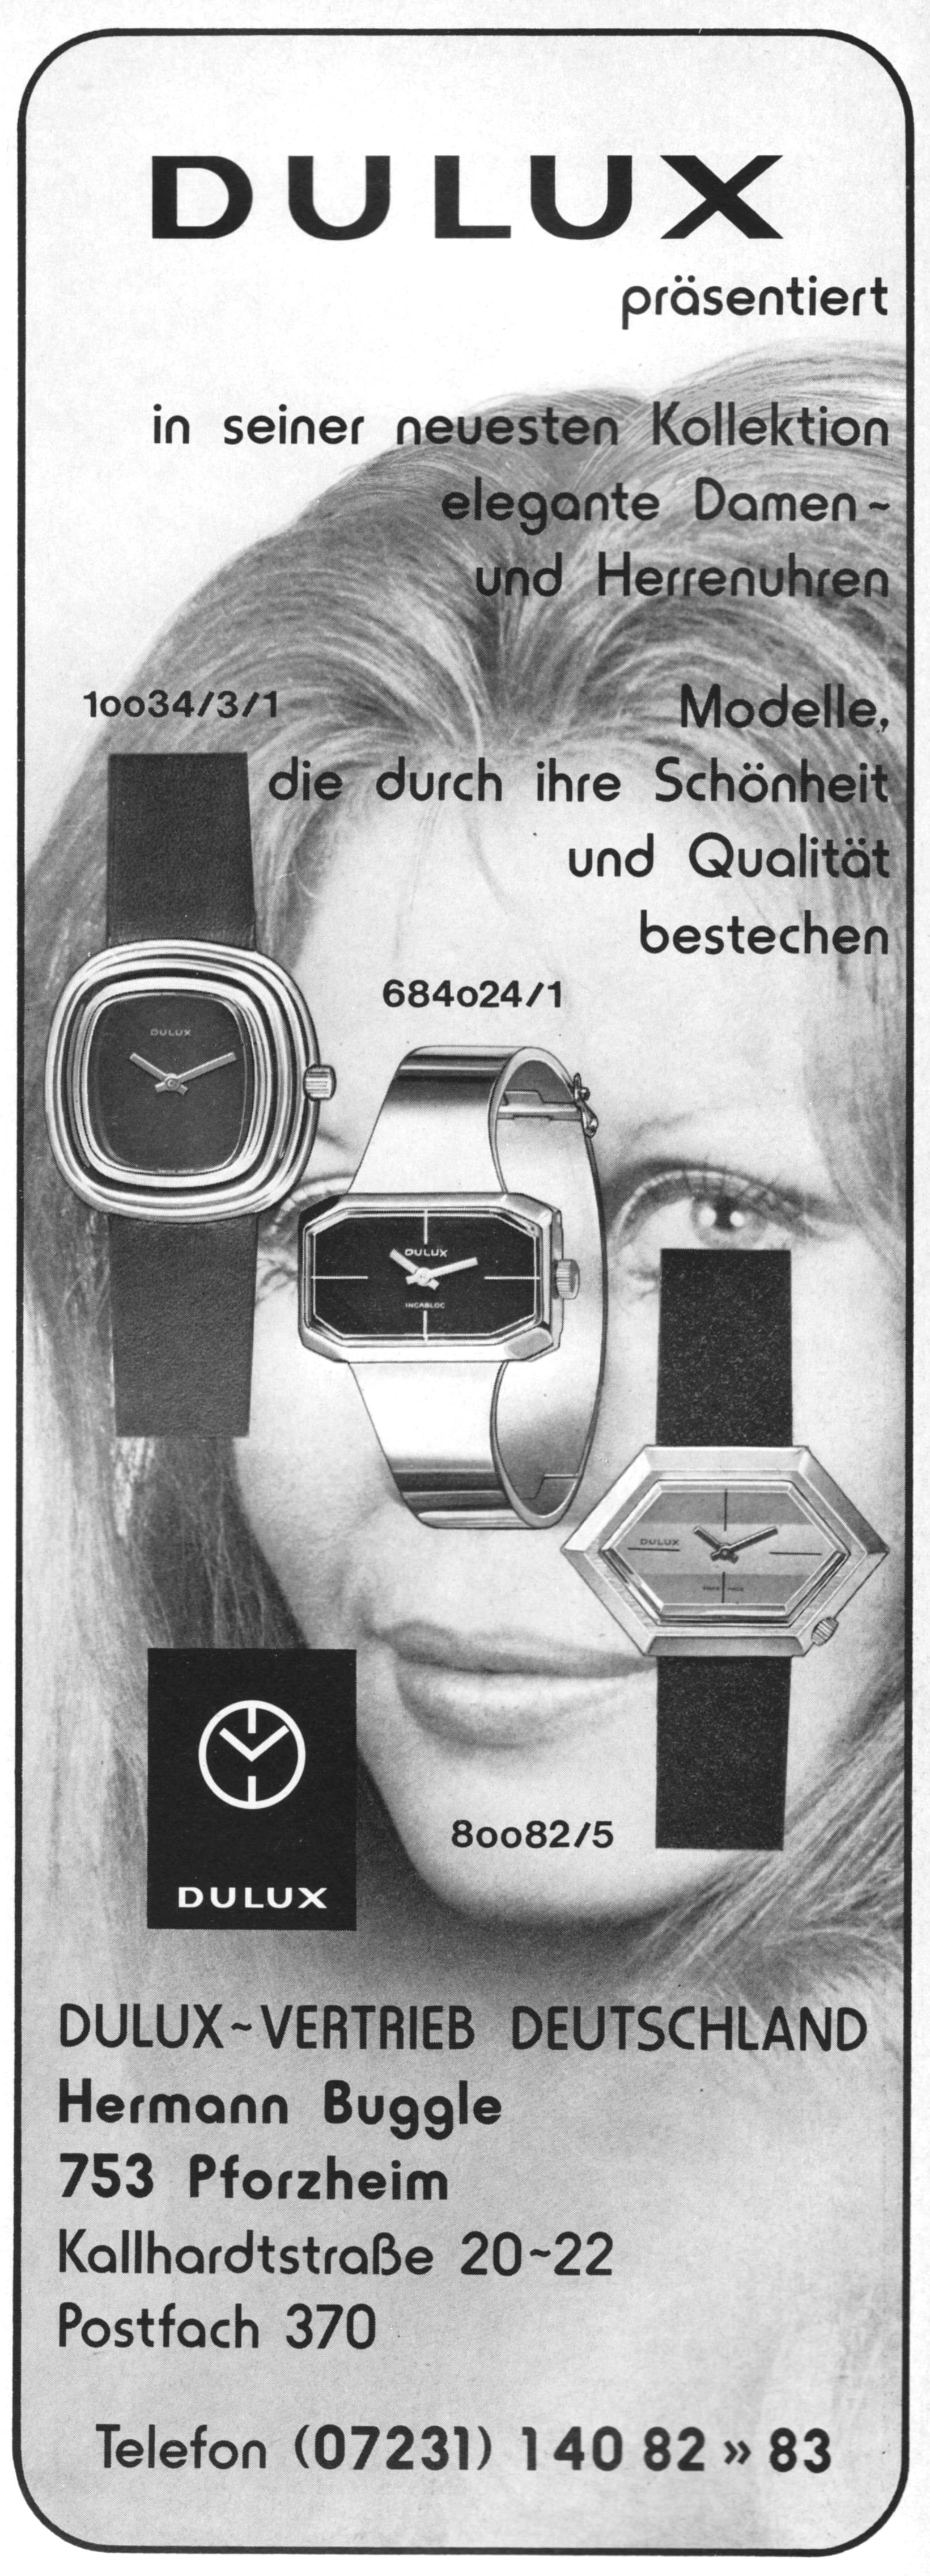 Dulux 1973 1.jpg